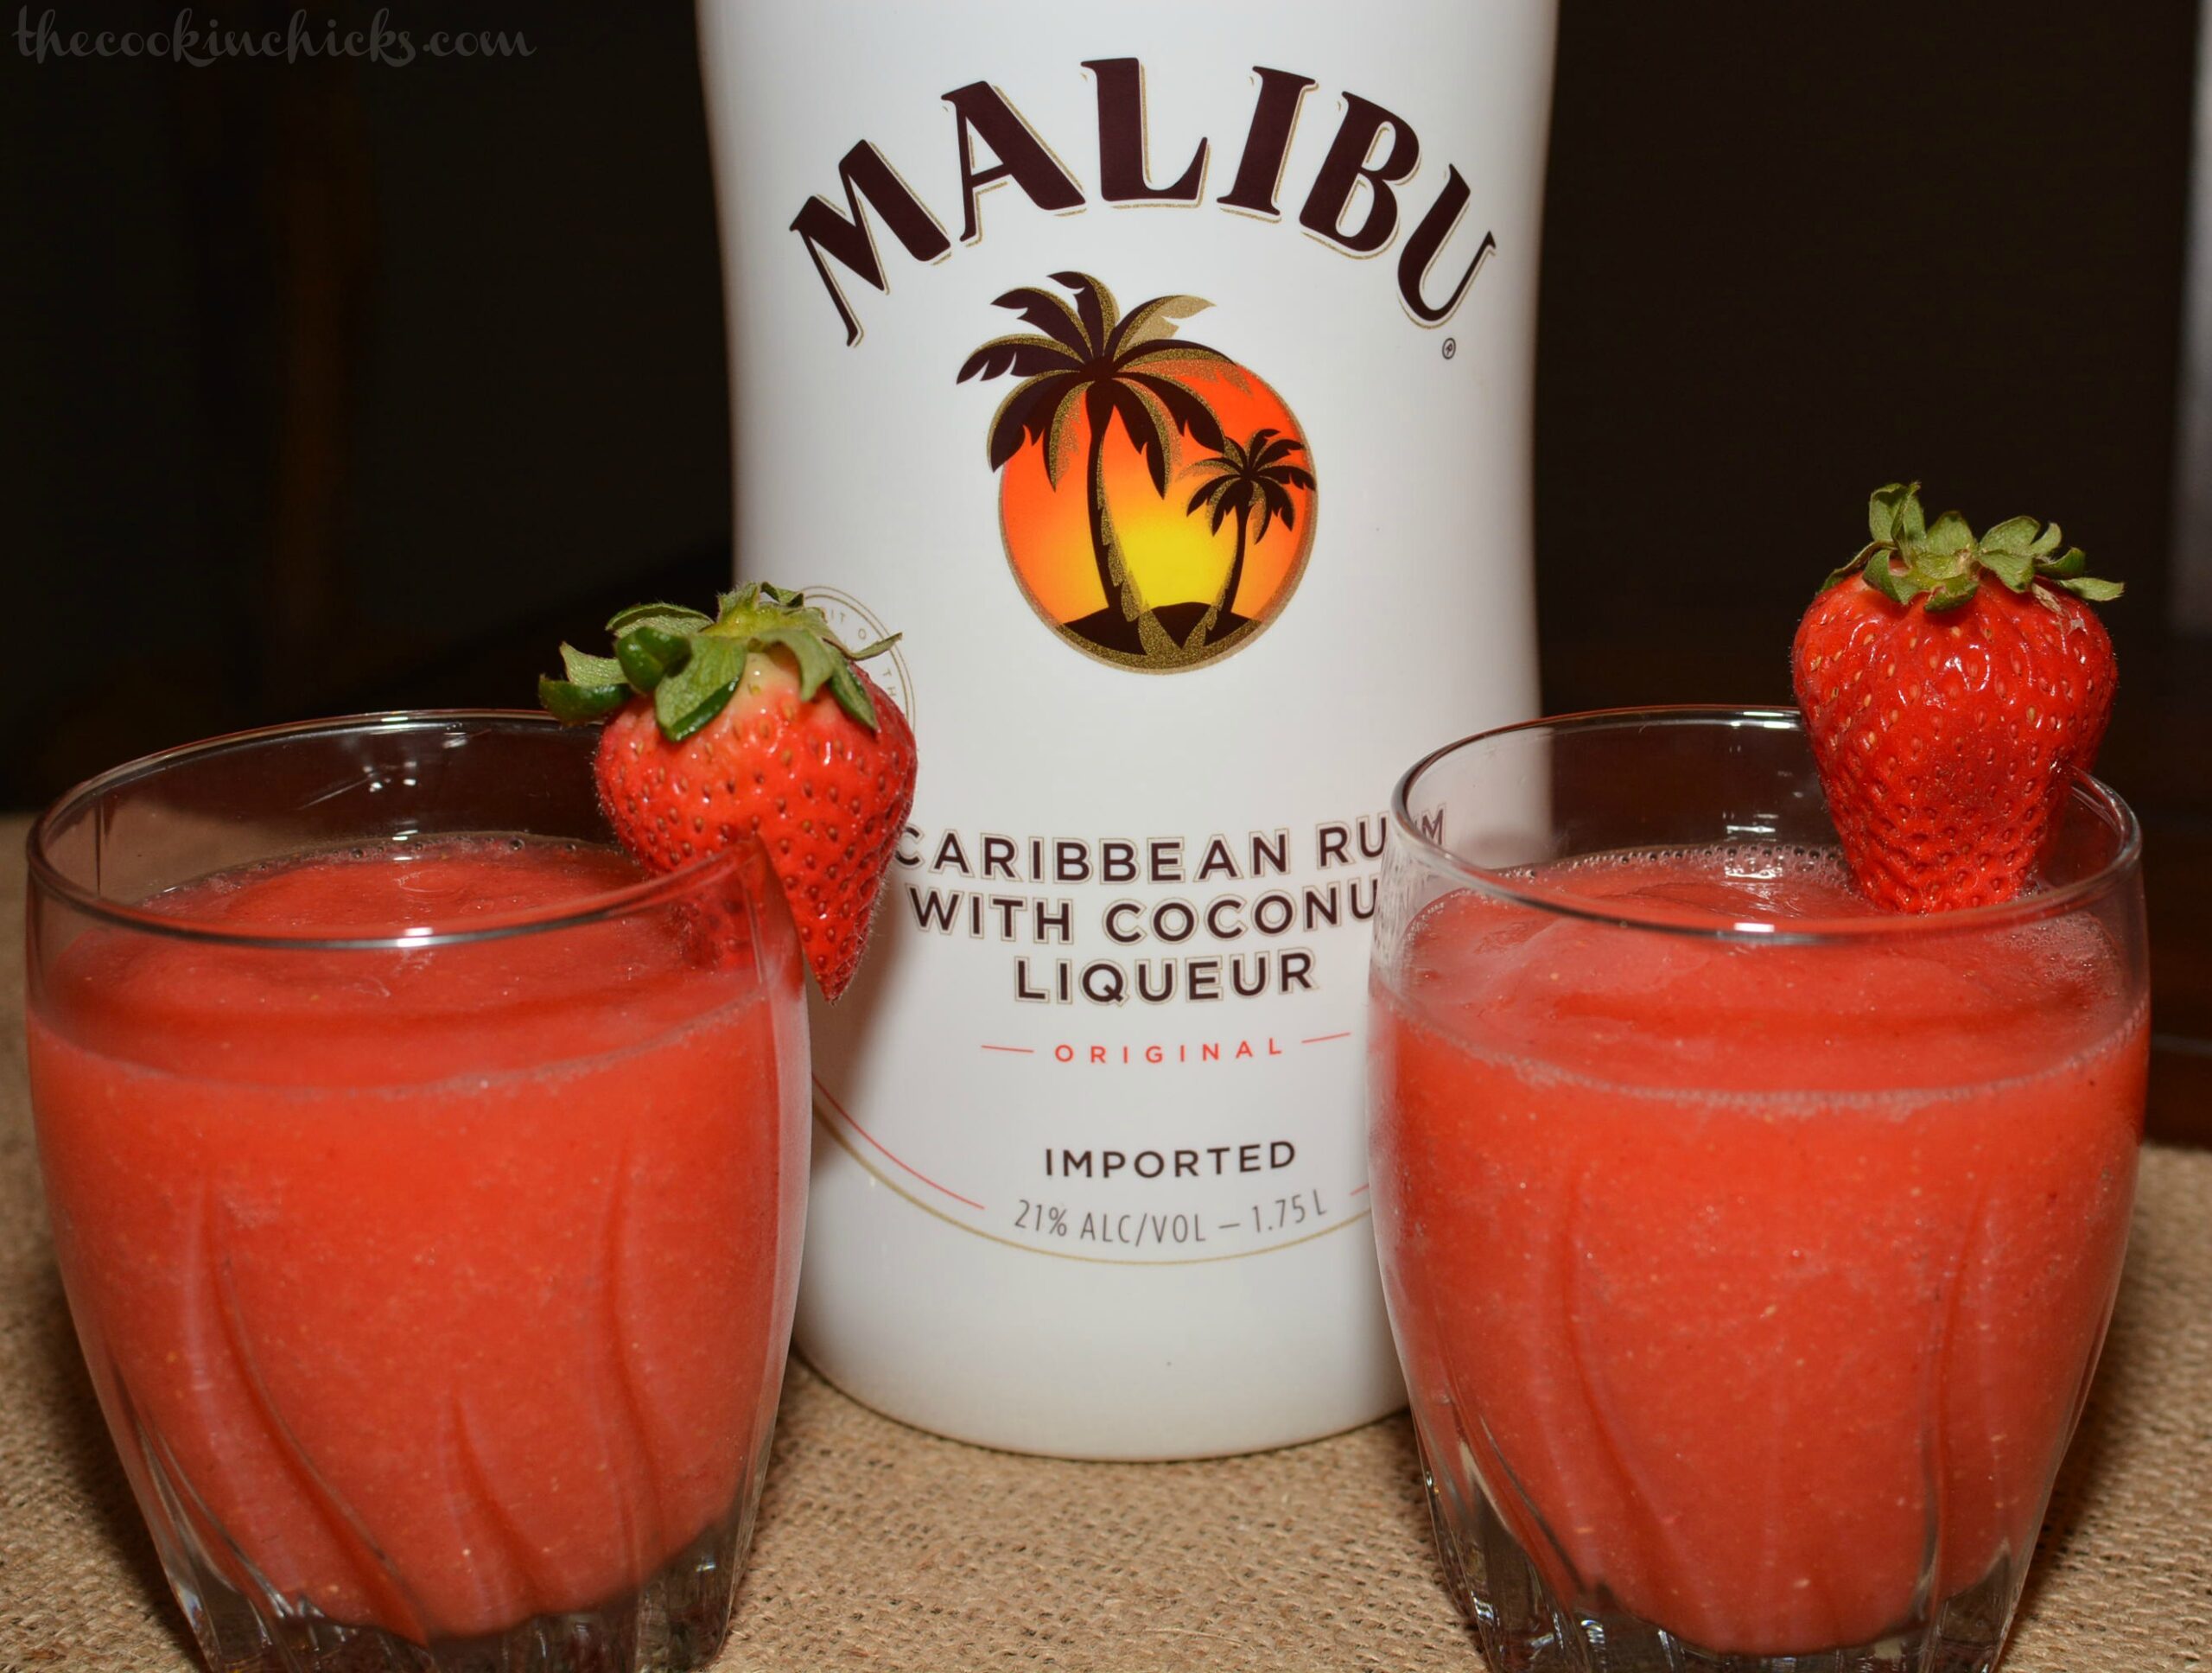 Mixed Drink Recipes With Malibu Coconut Rum | Dandk Organizer